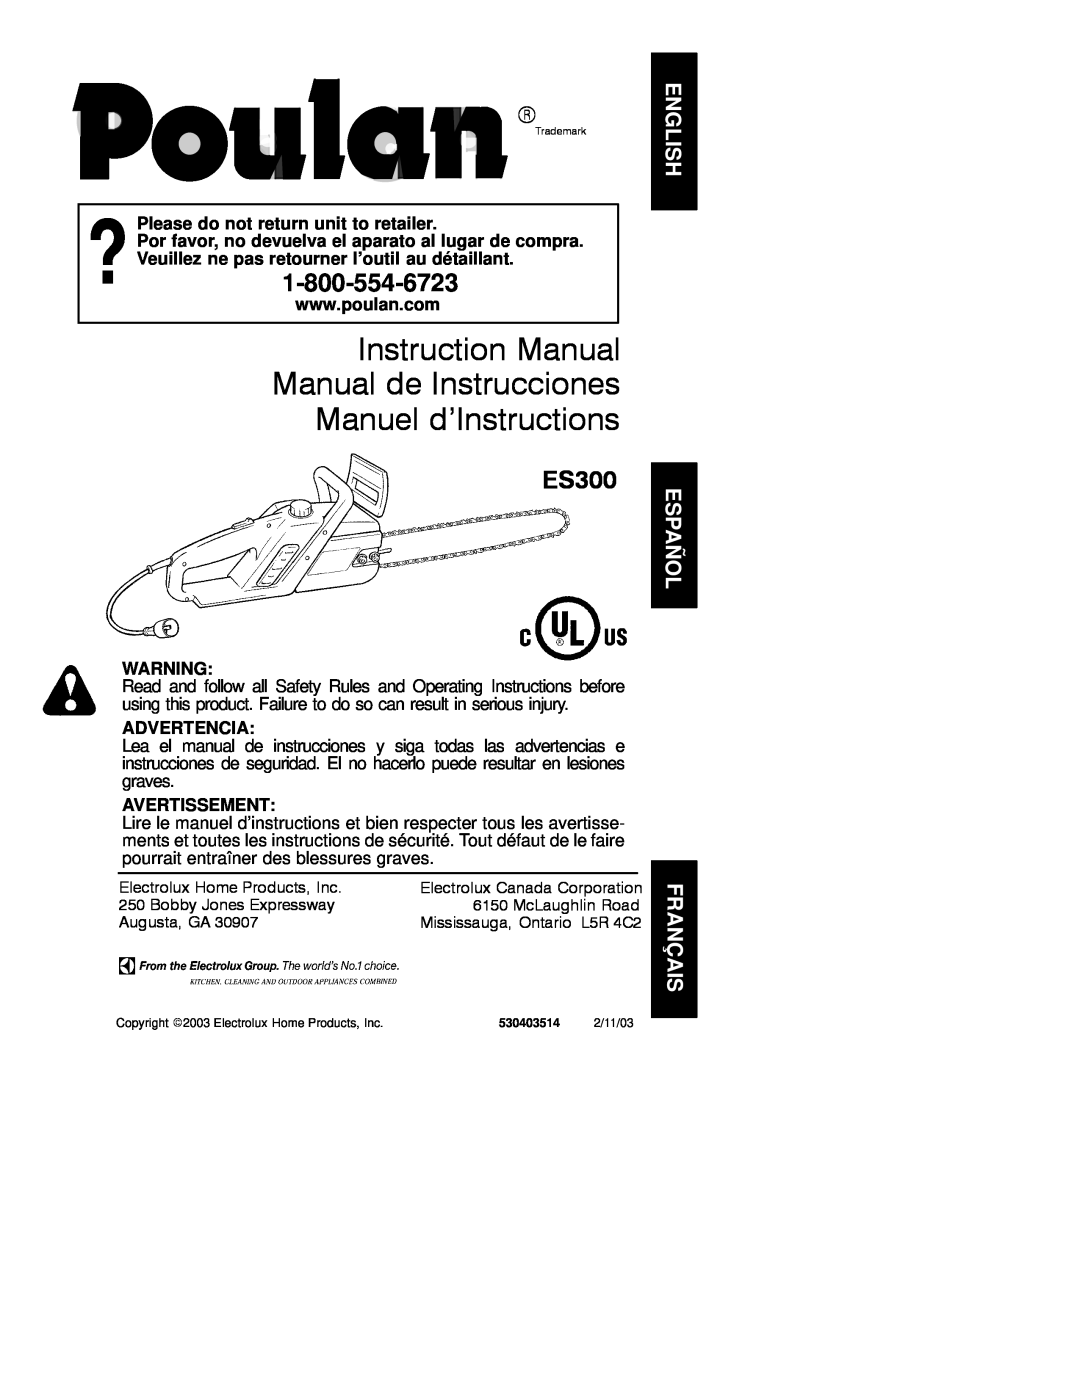 Poulan ES300 instruction manual Instruction Manual Manual de Instrucciones Manuel d’Instructions, Advertencia 